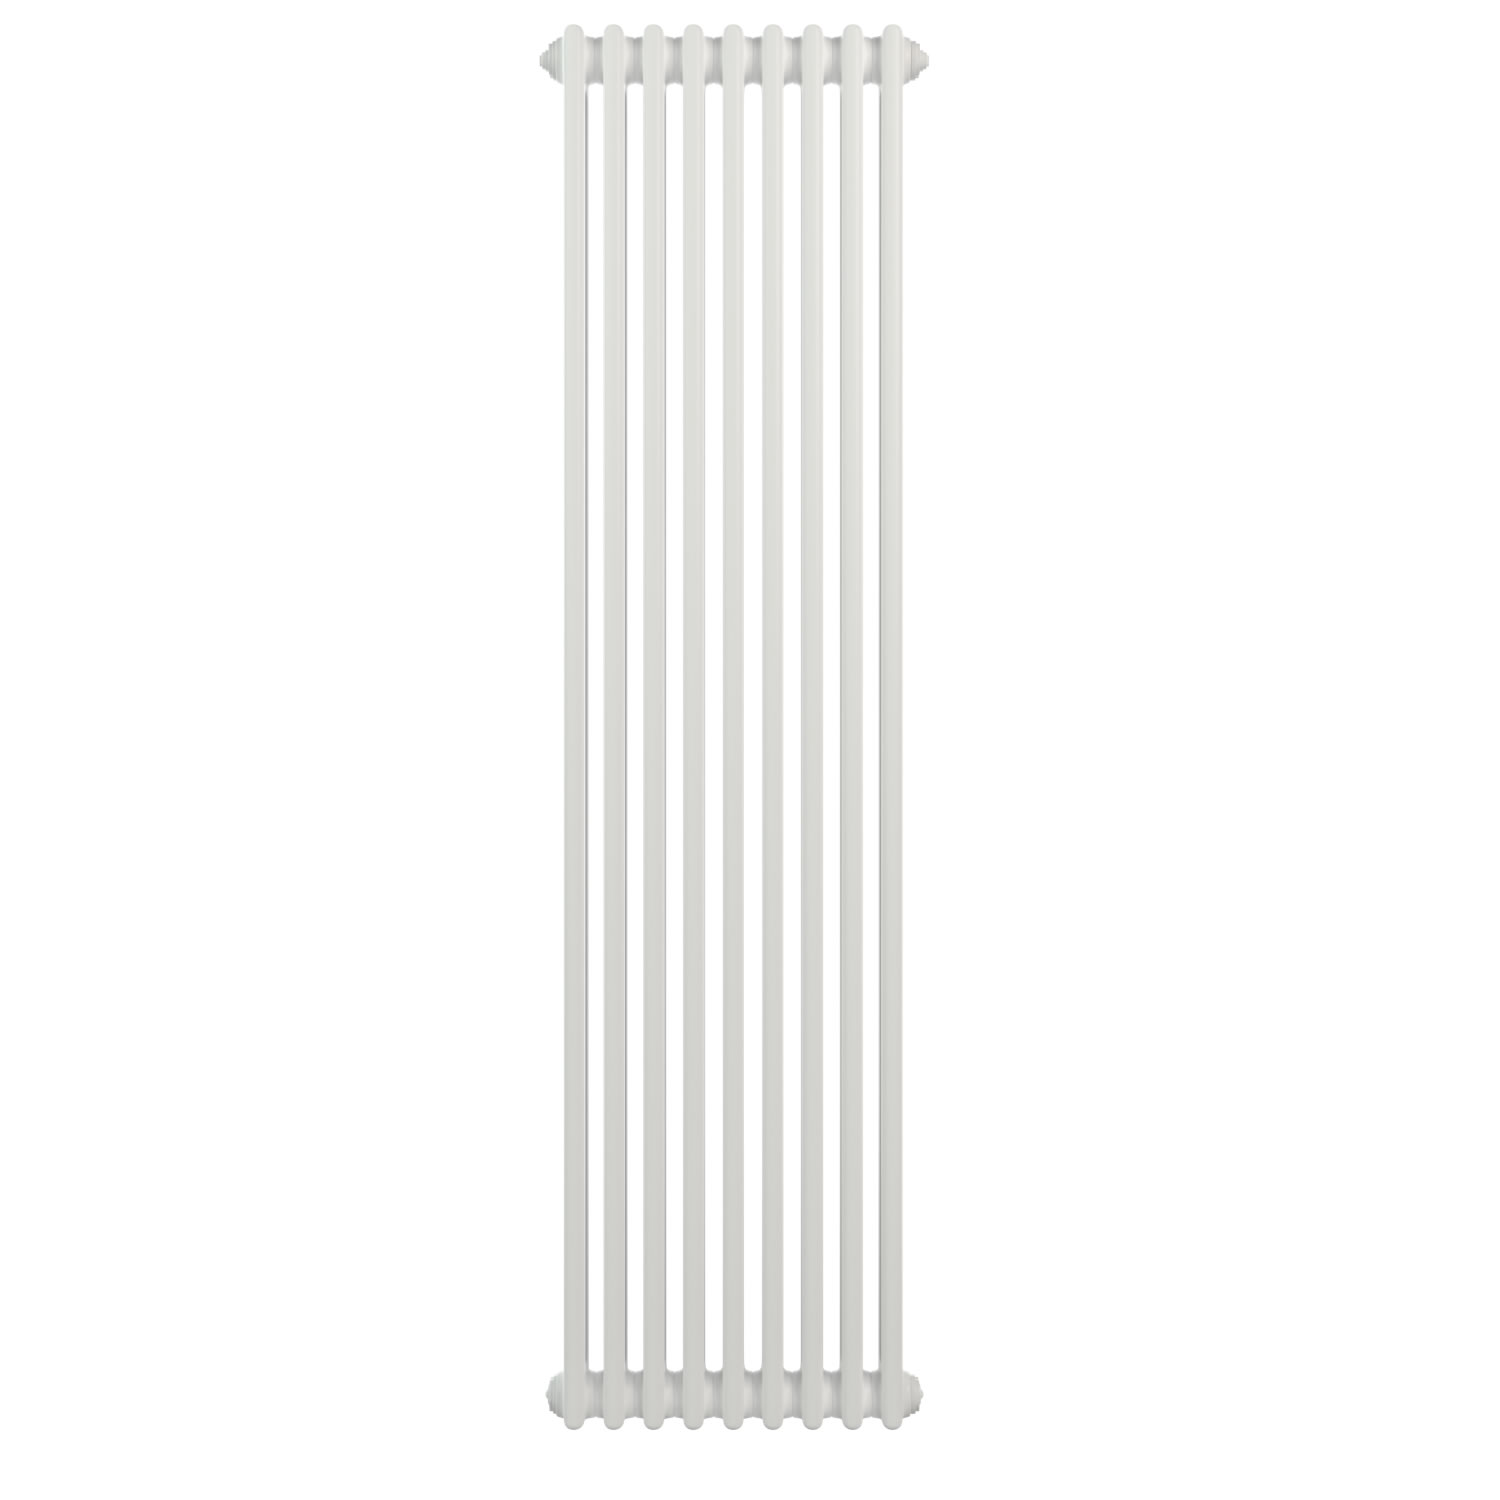 Stelrad Vita Column Vertical radiator loyalty reward